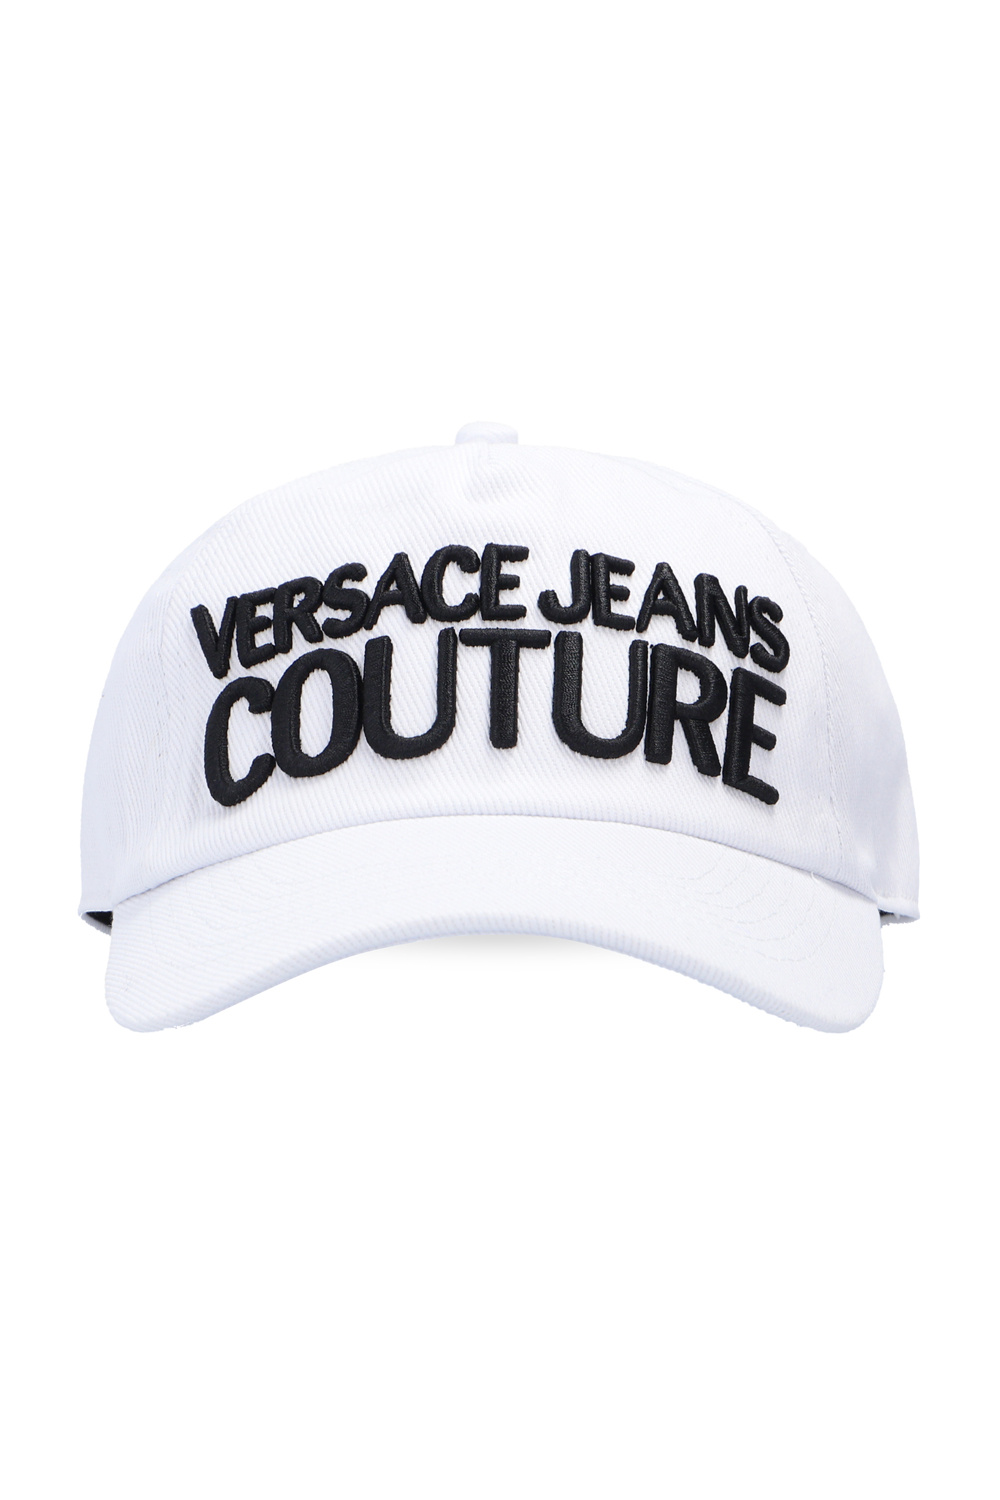 Versace Jeans Couture monnalisa floral bucket hat